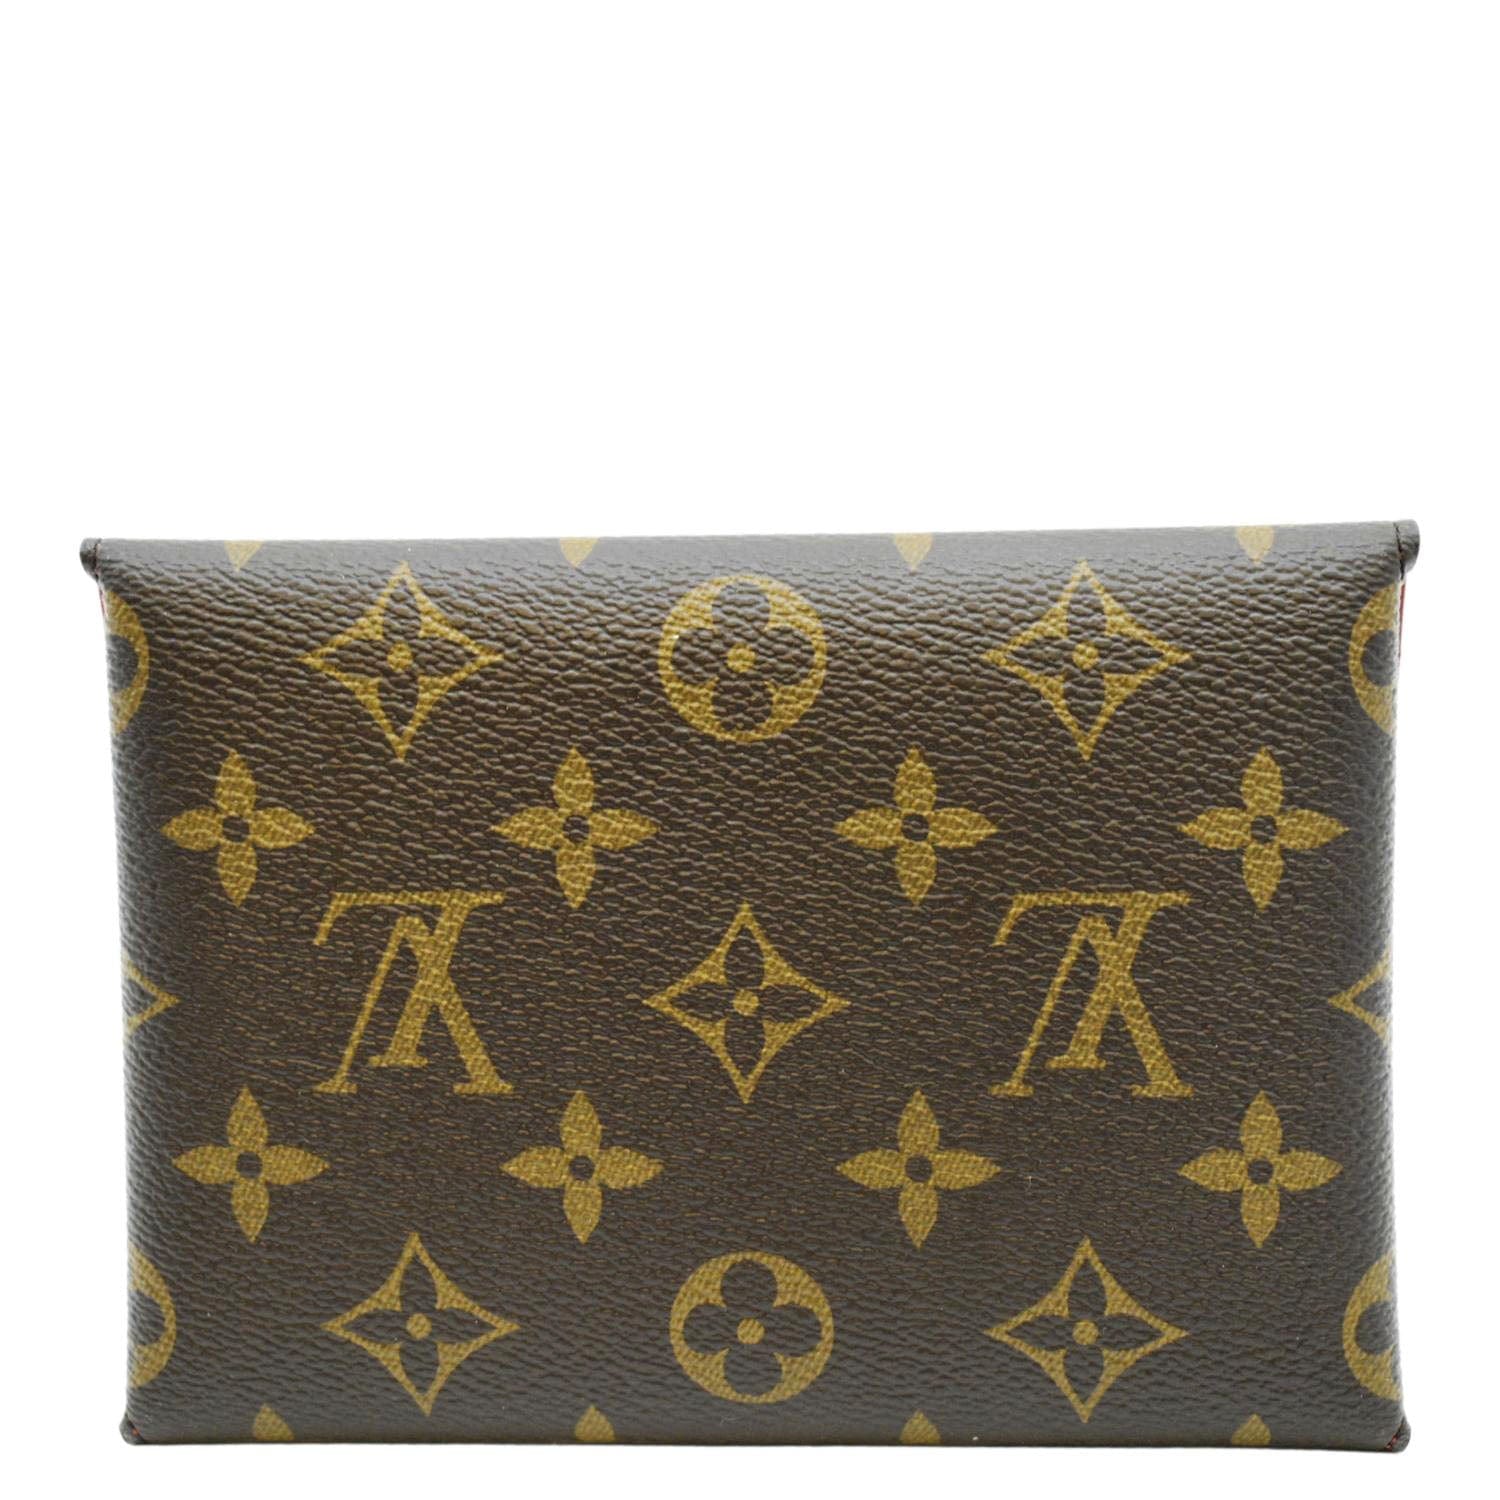 Turning Louis Vuitton Kirigami Pochette into crossbody purse 